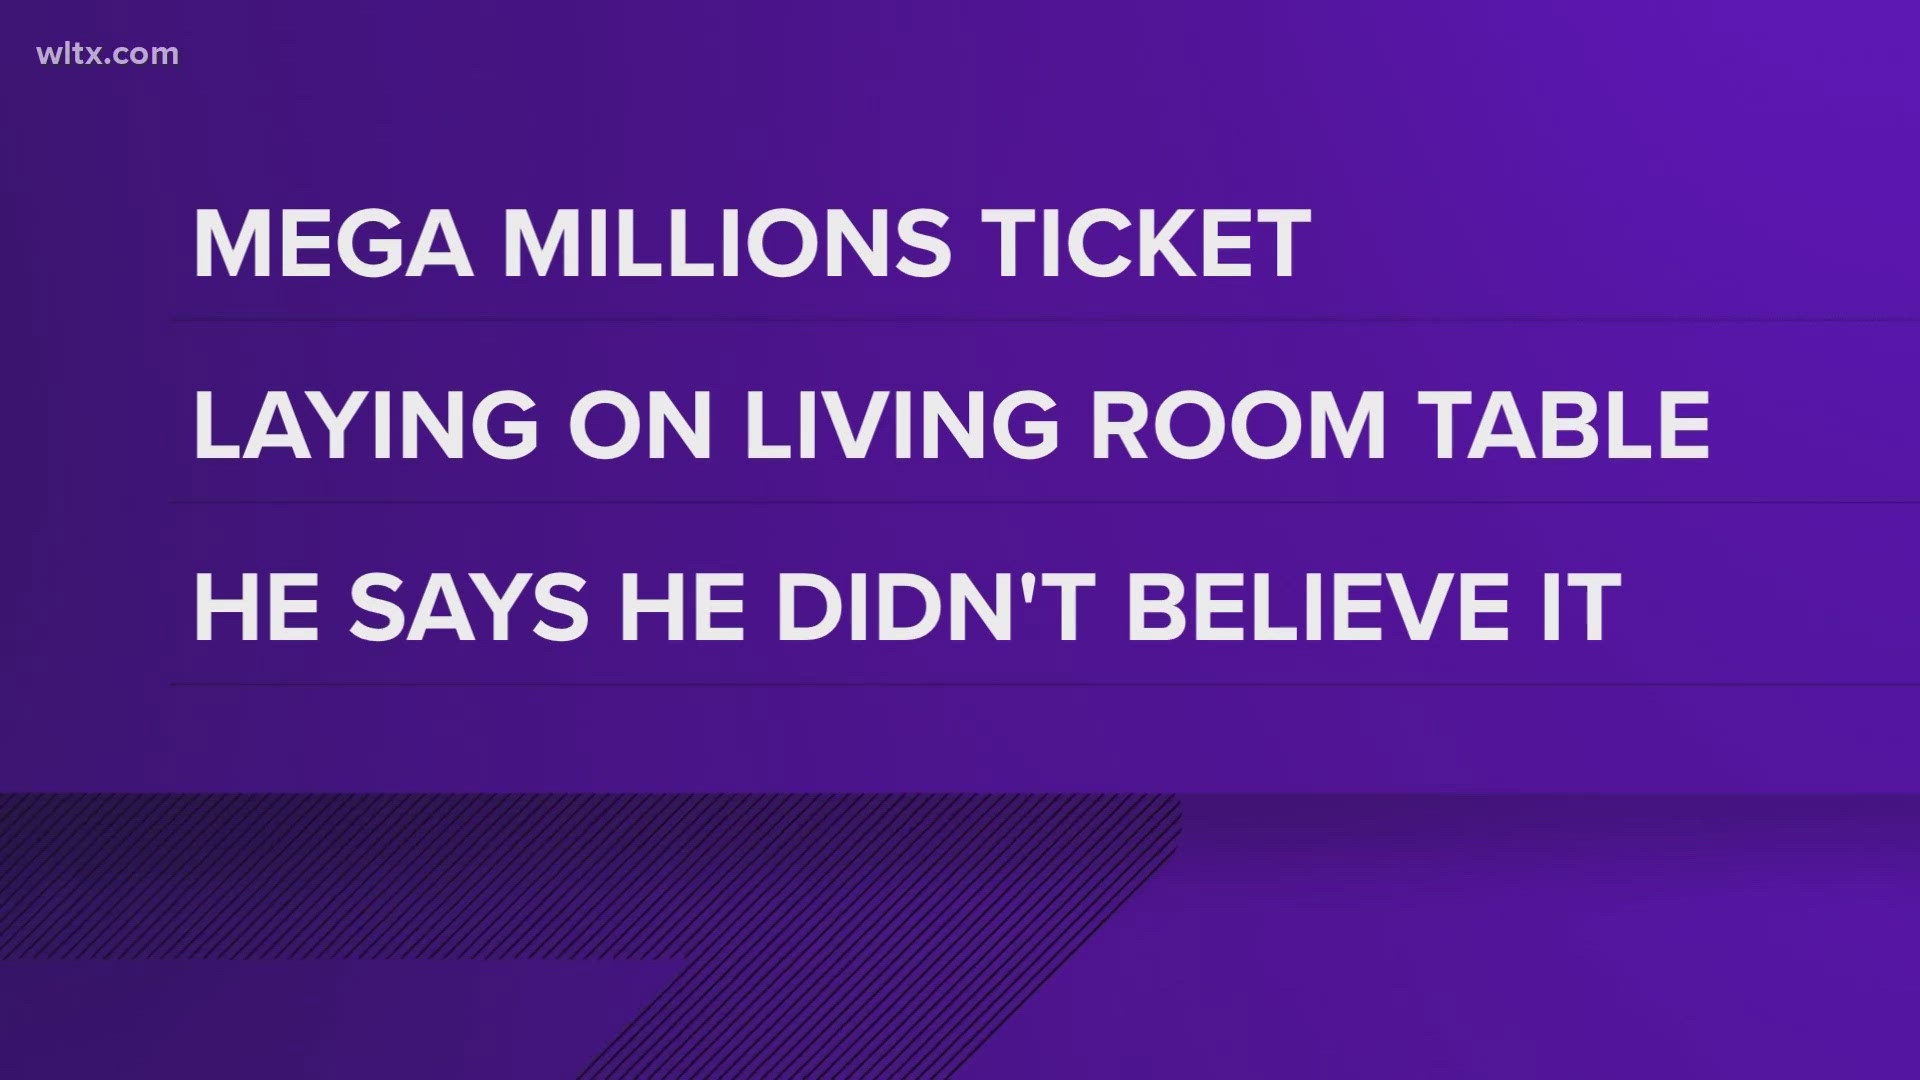 South Carolina man discovers 1M Mega Millions ticket at home